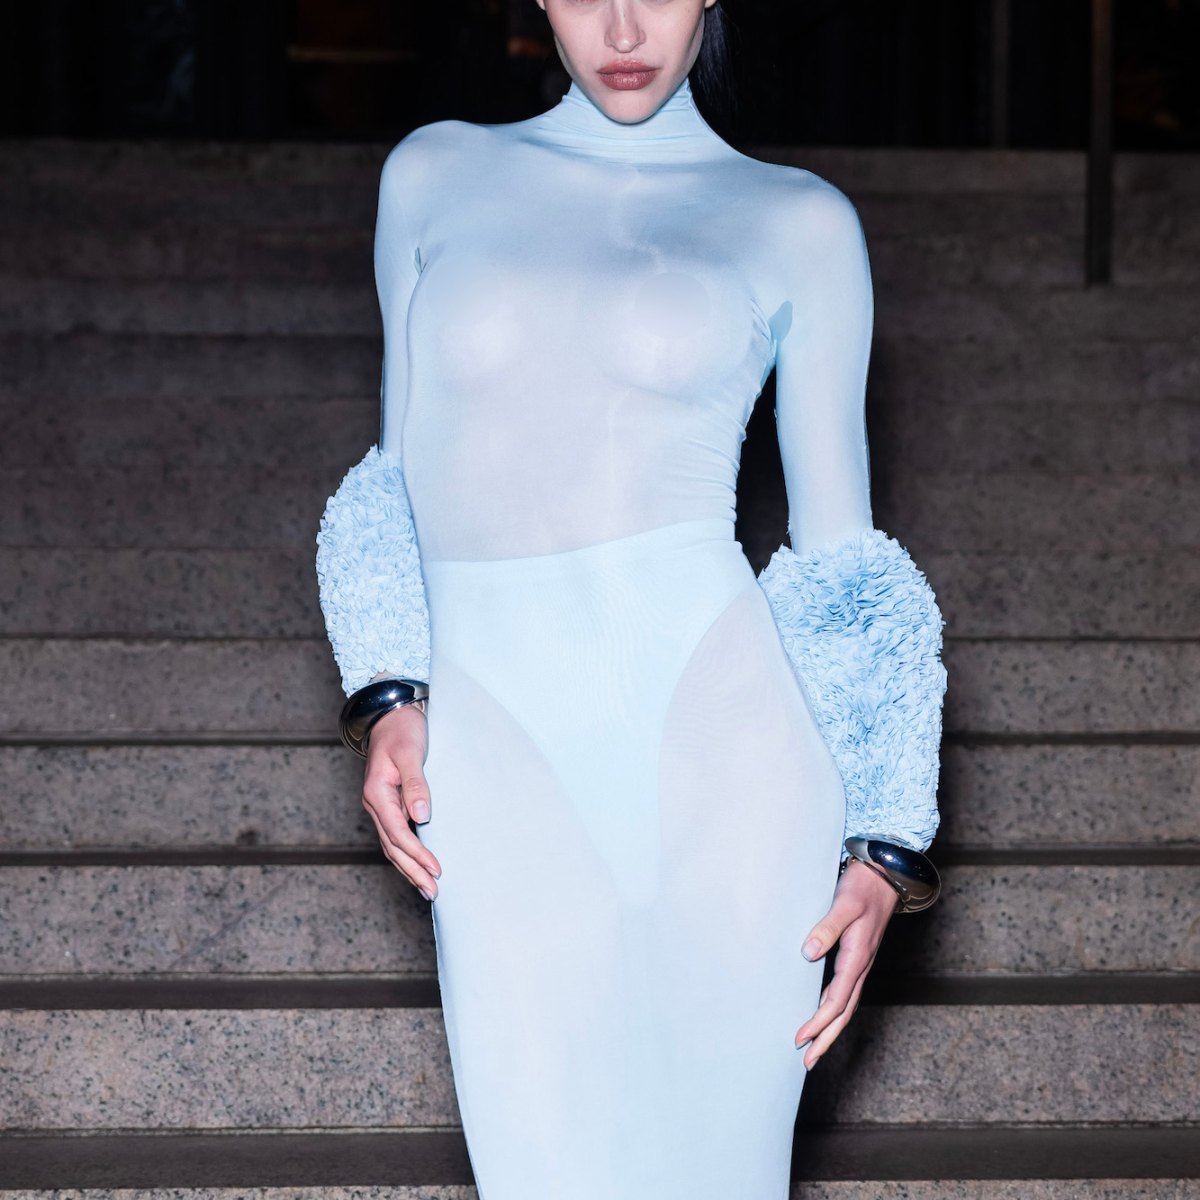 Amelia Hamlin's Double Slit Dress At Fashion Week – Photos